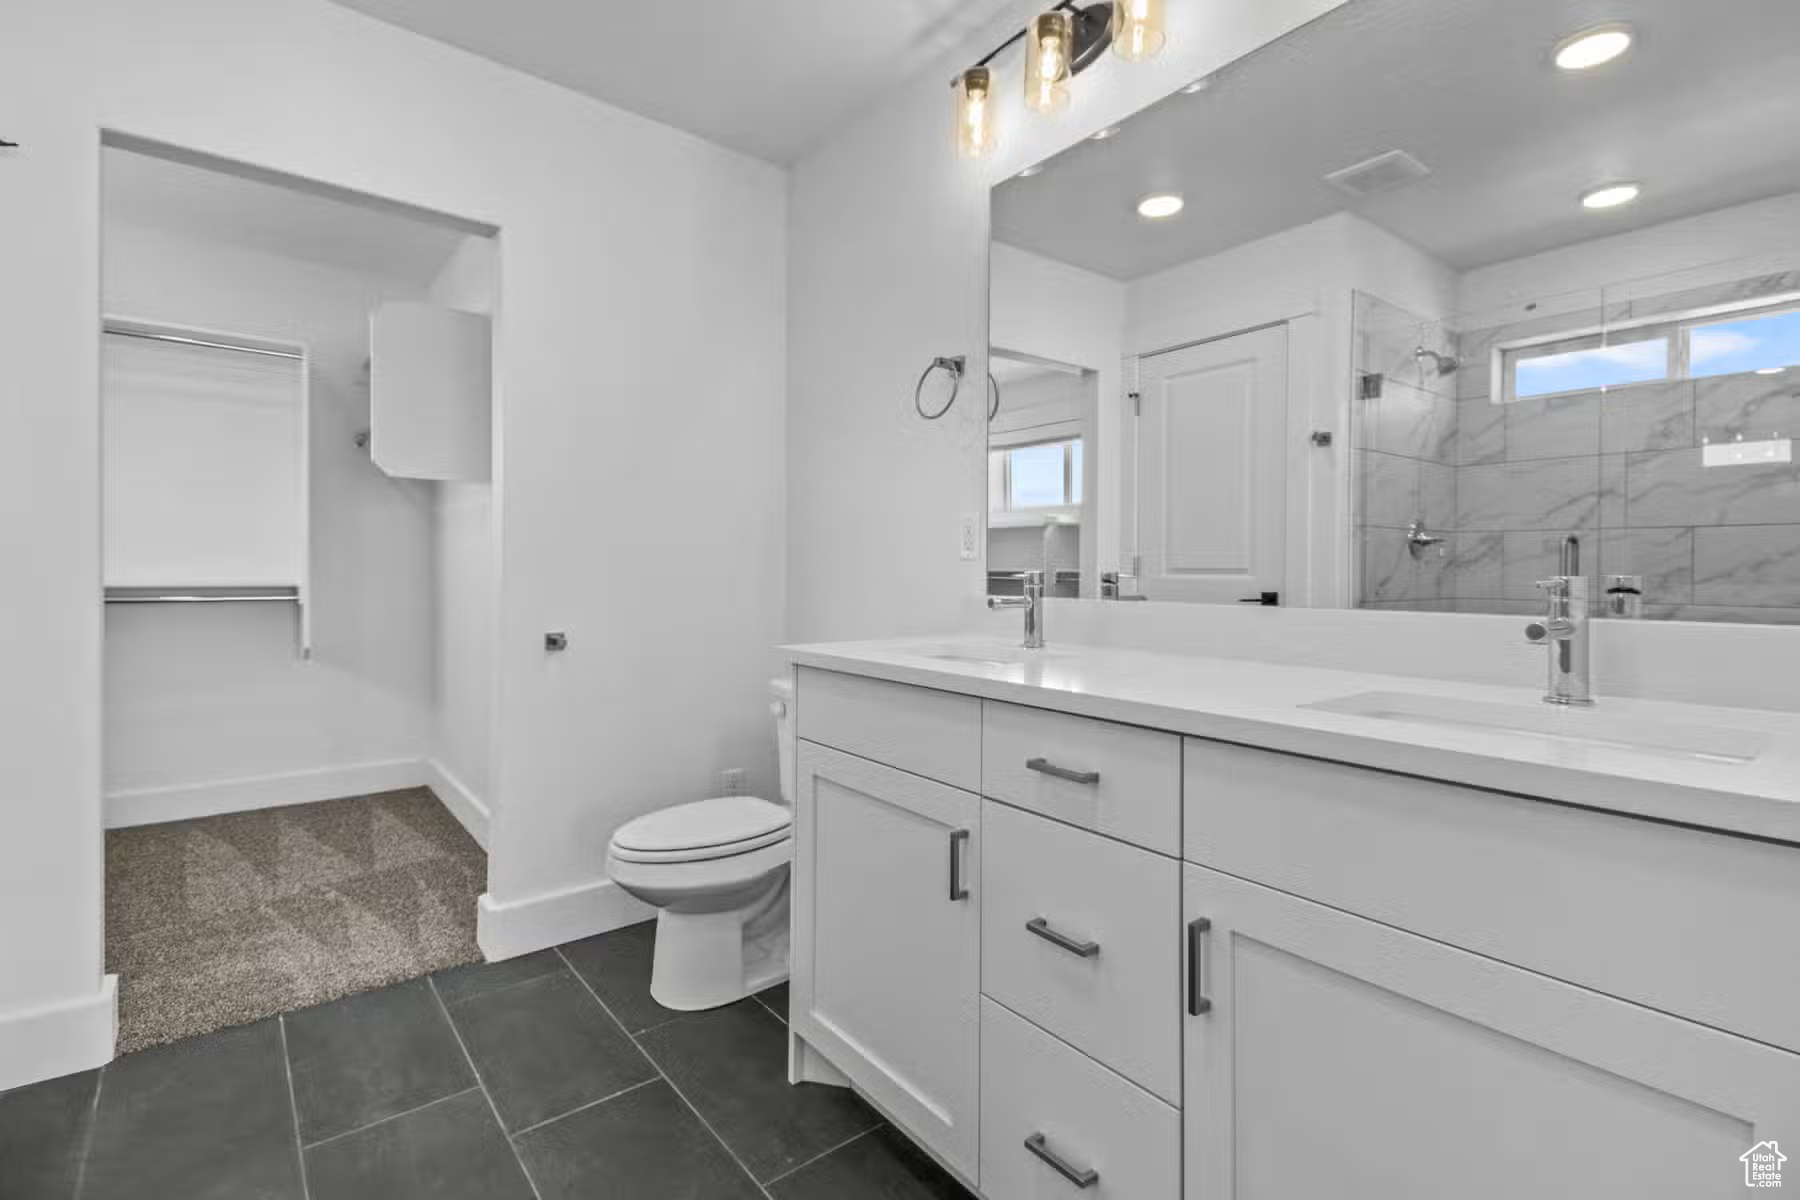 Bathroom with dual sinks, oversized vanity, plenty of natural light, toilet, and tile floors